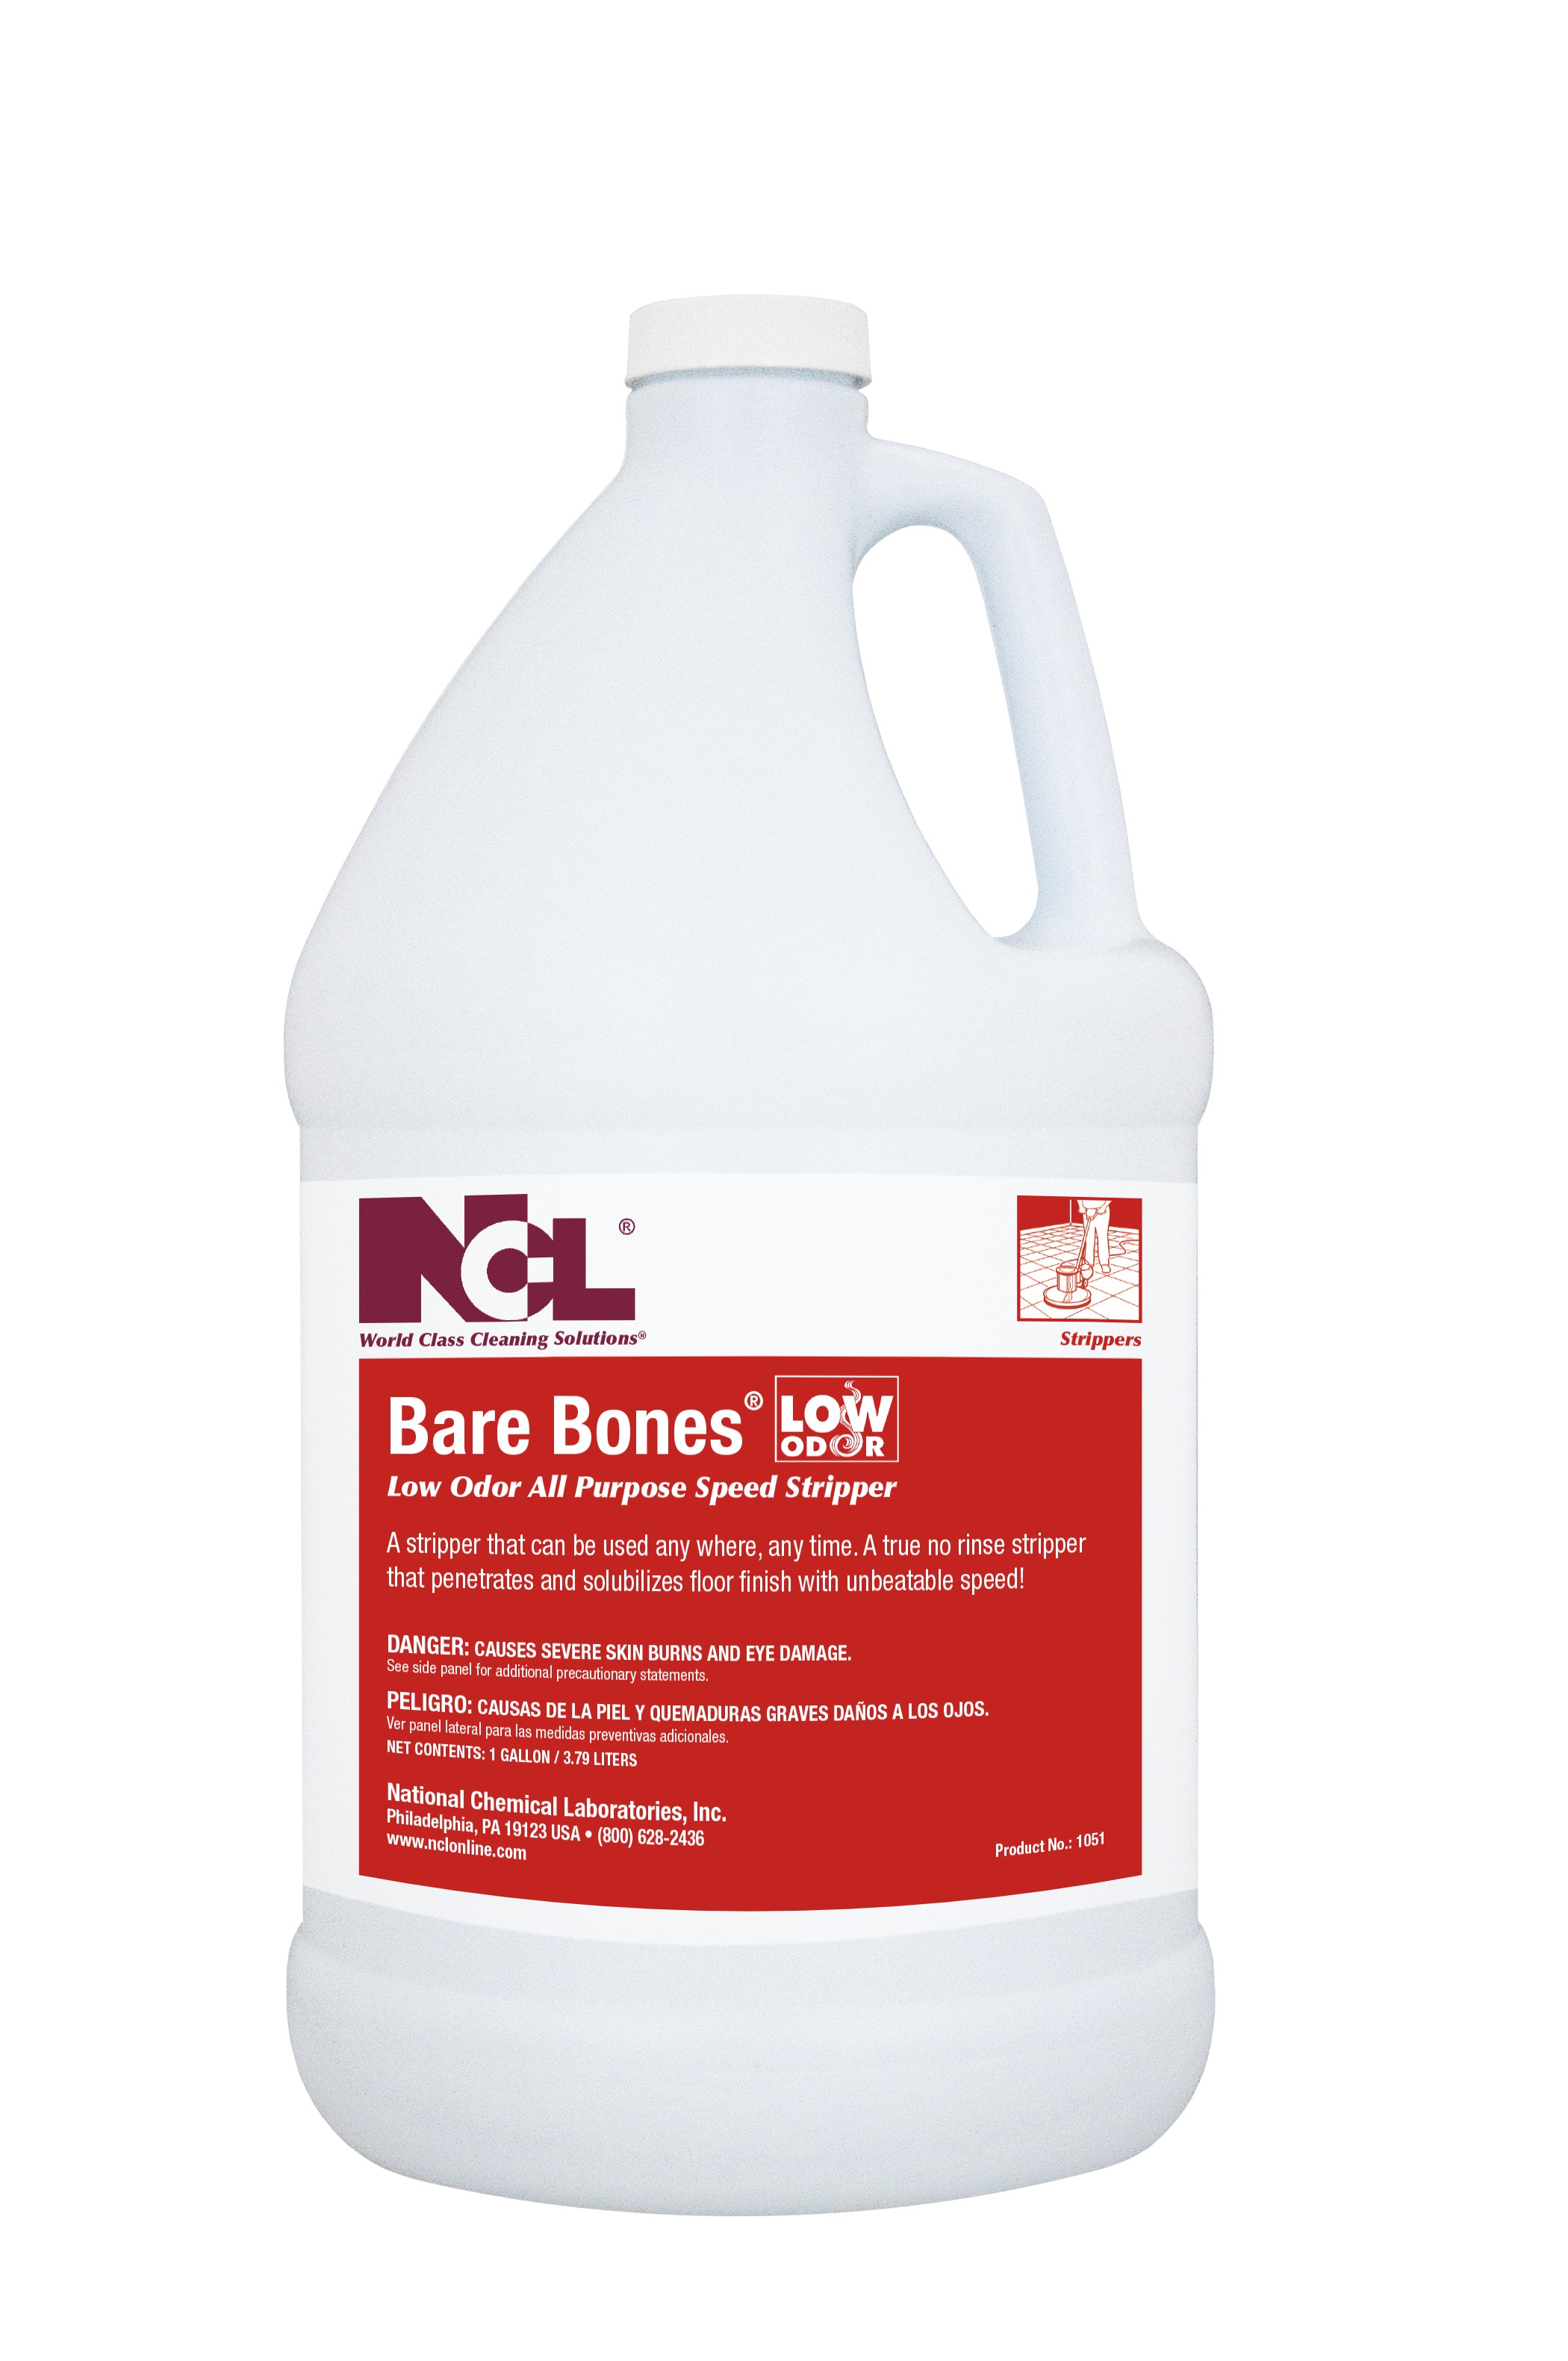 NCL Bare Bones No-Rinse Low Odor All Purpose Speed